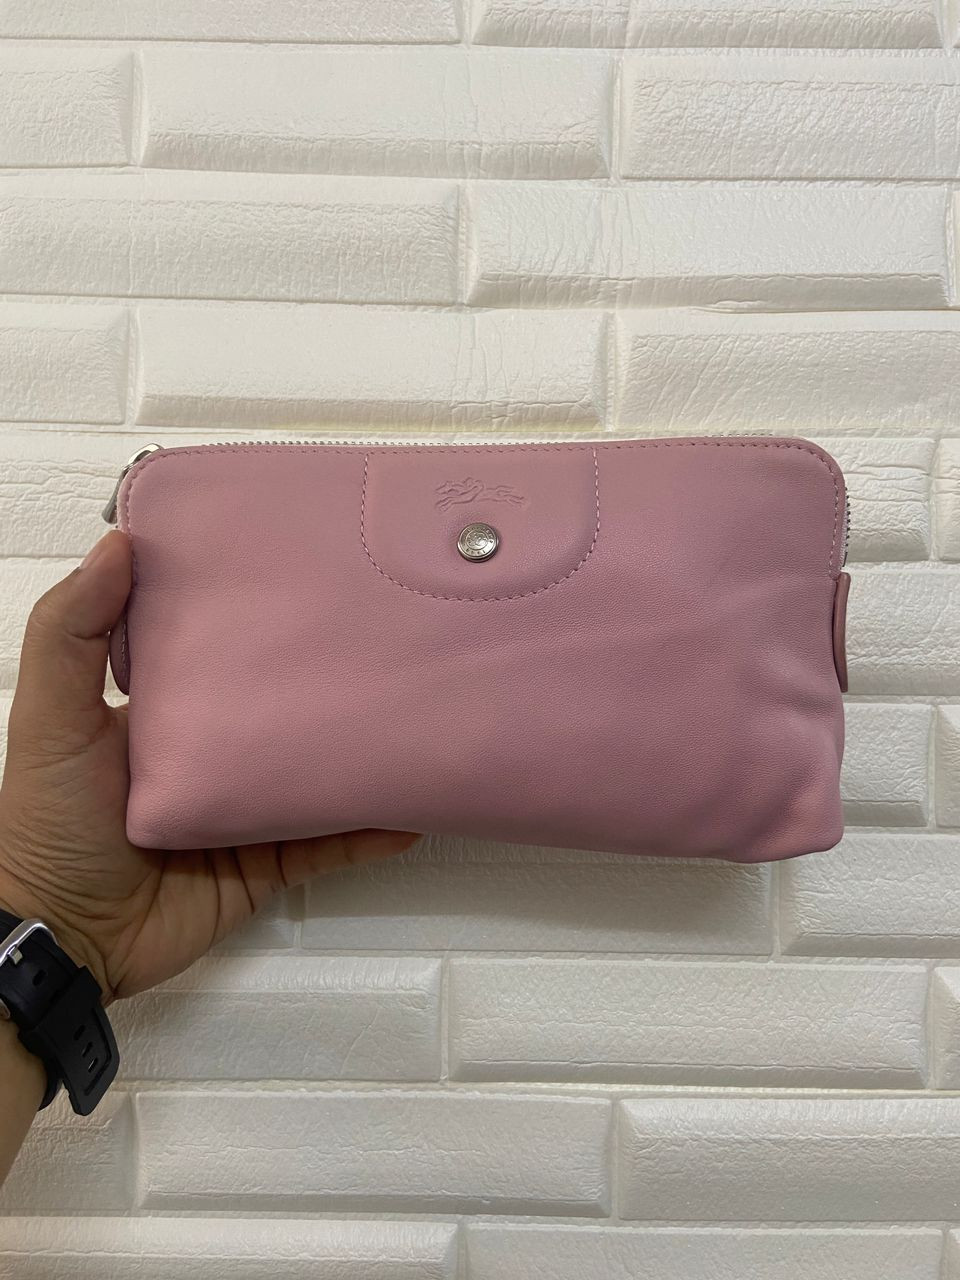 Longchamp Leather Pouch - Blush Pink - 21x13x4cm